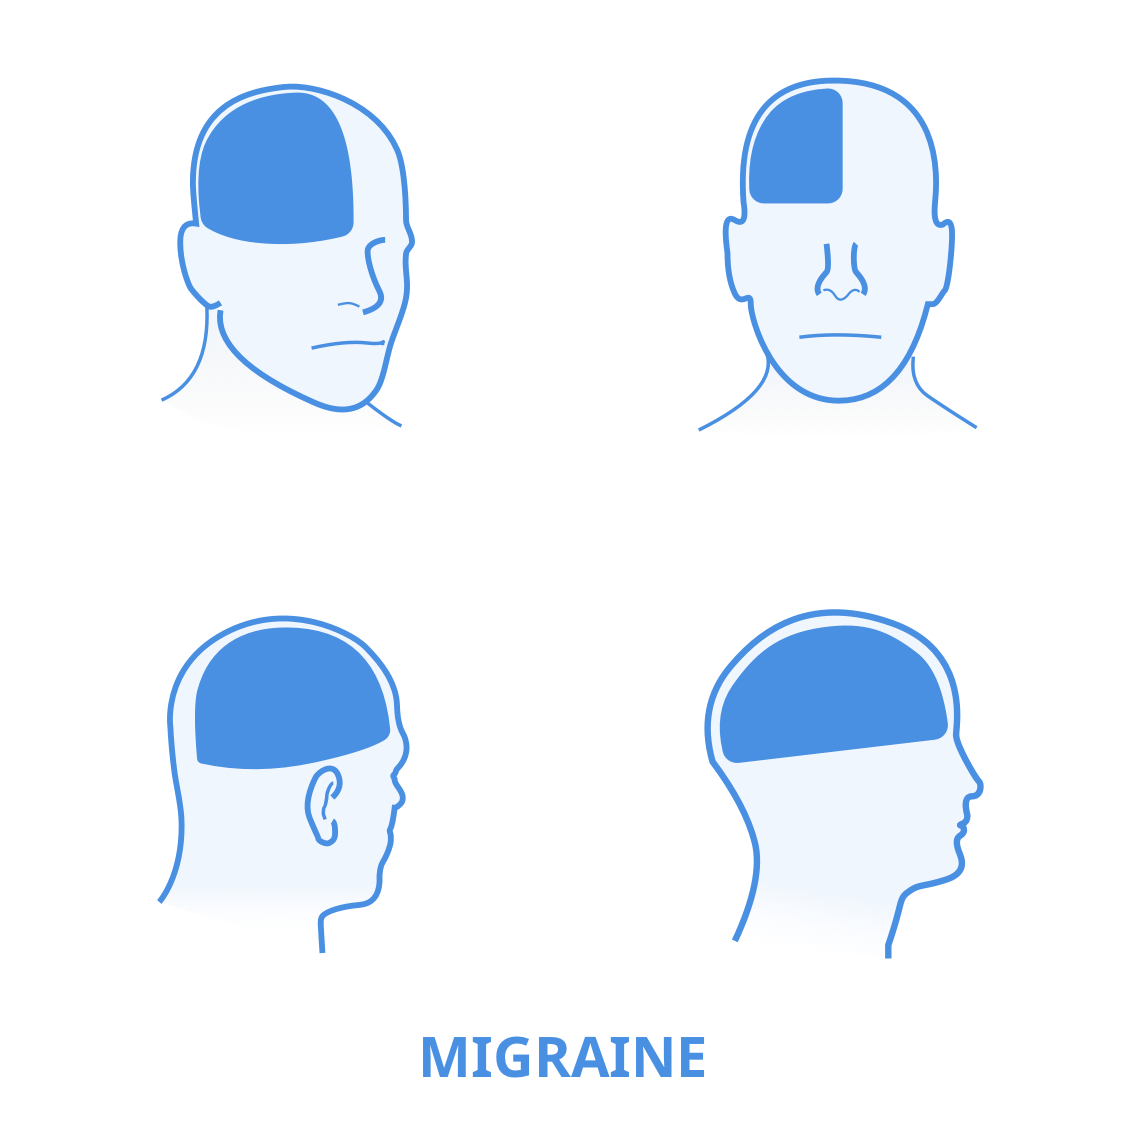 Different types of migraines